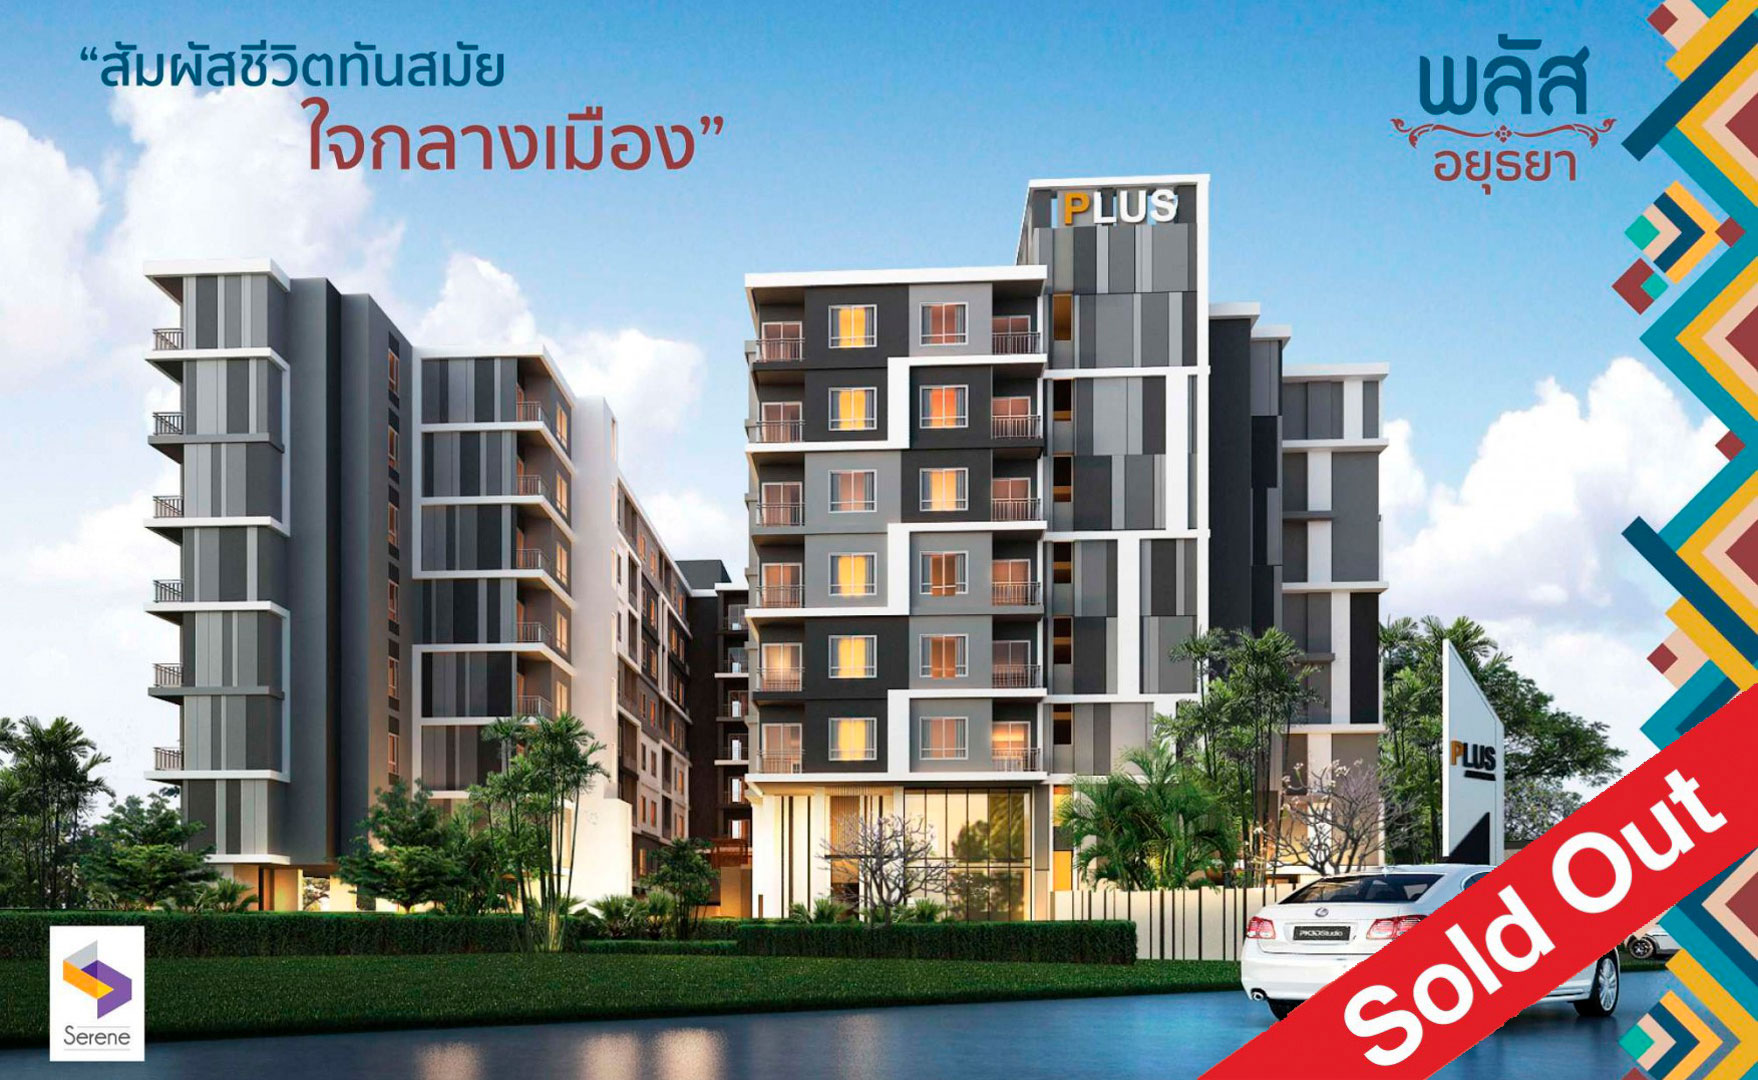 Plus Condominium Ayutthaya